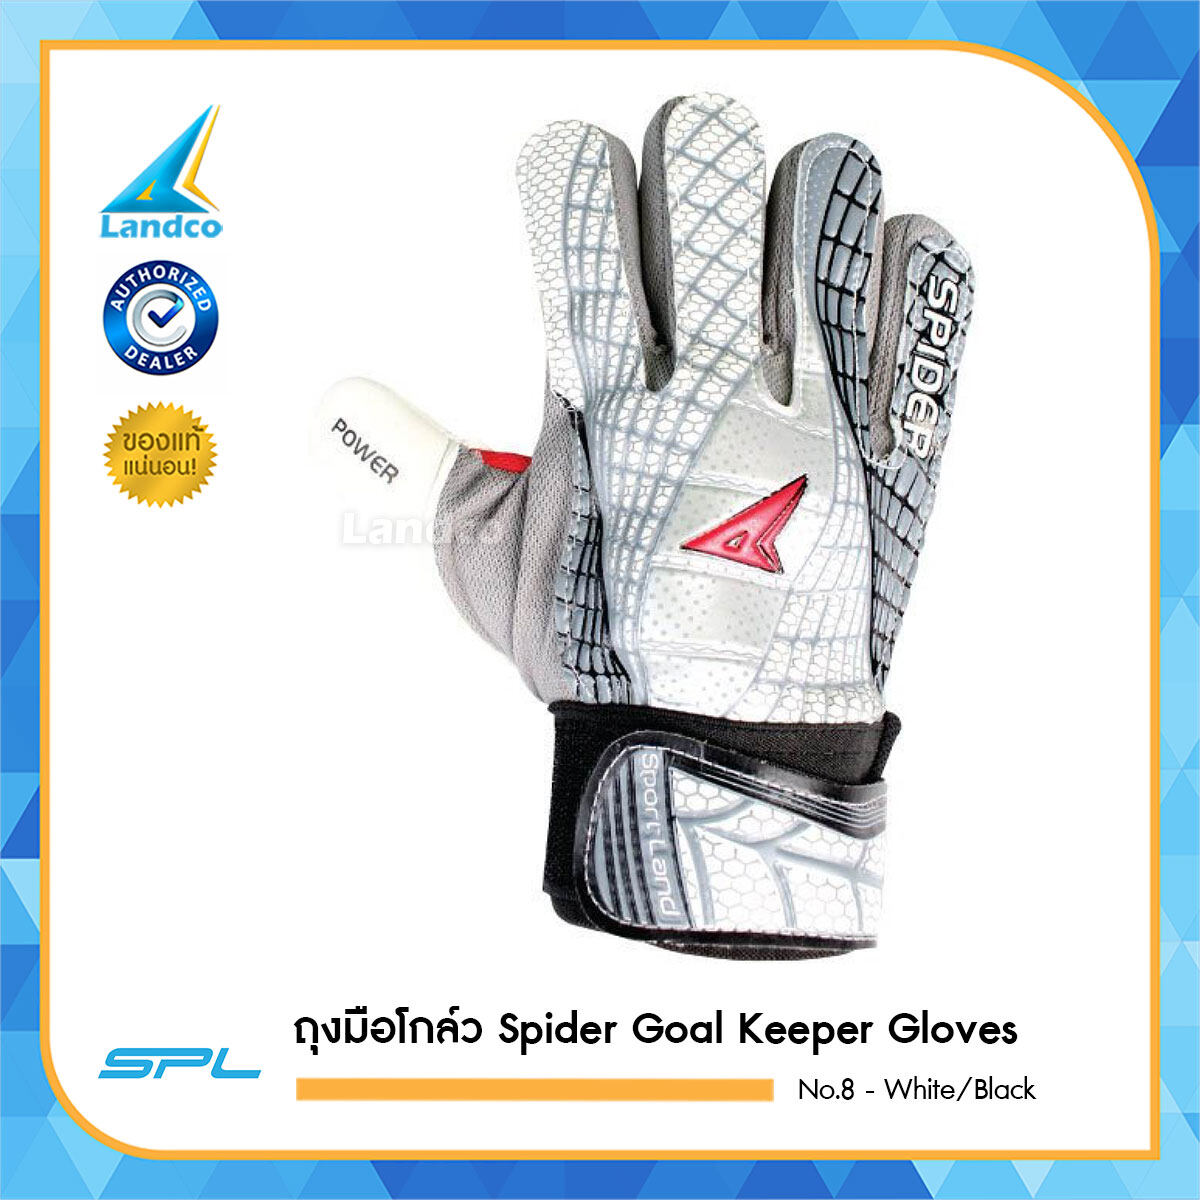 SPORTLAND Spider Goal Keeper Gloves No.8 - White/Black